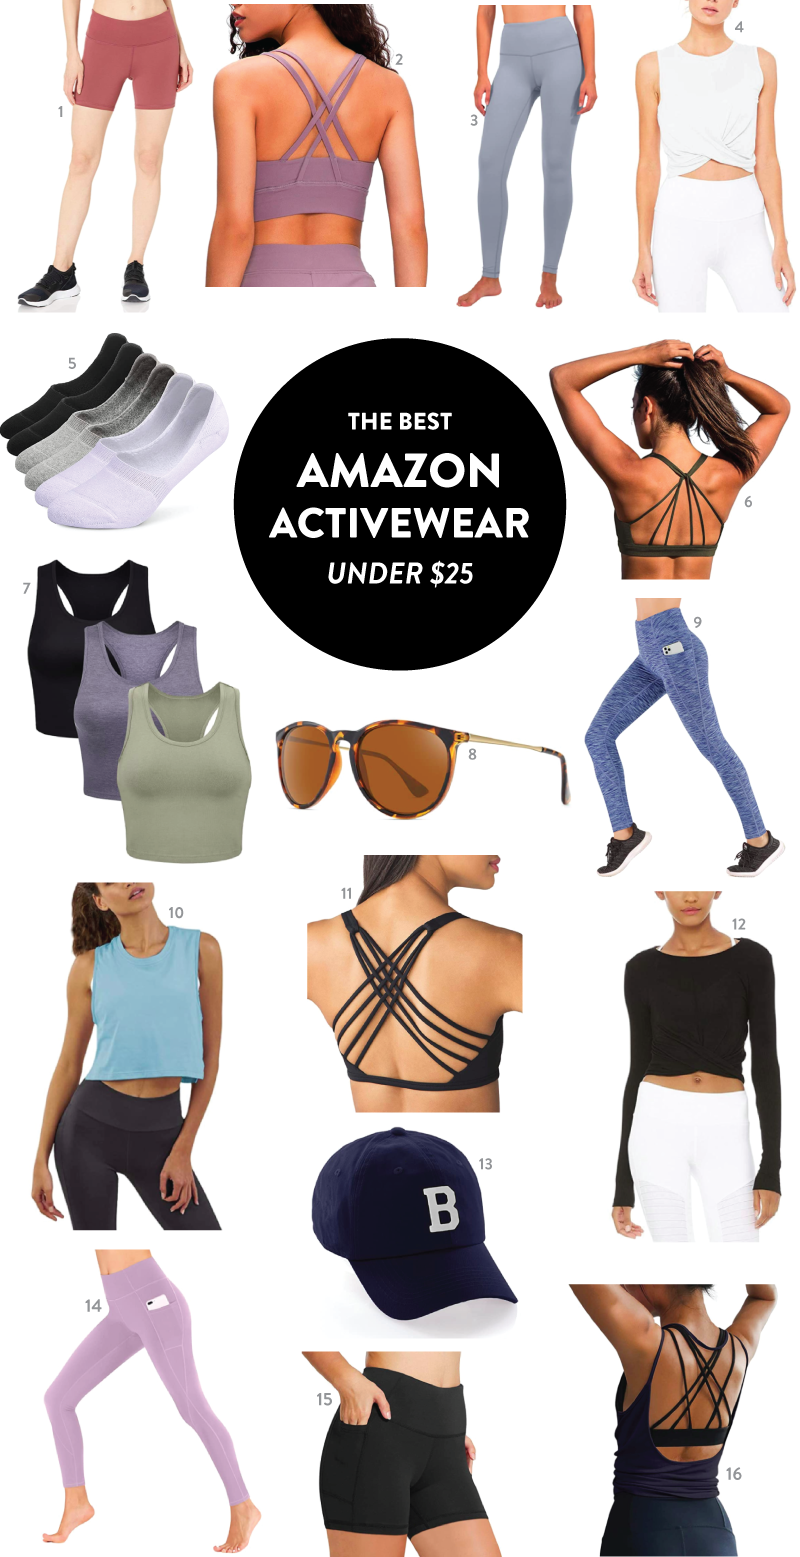 The Best Amazon Activewear Under $25 